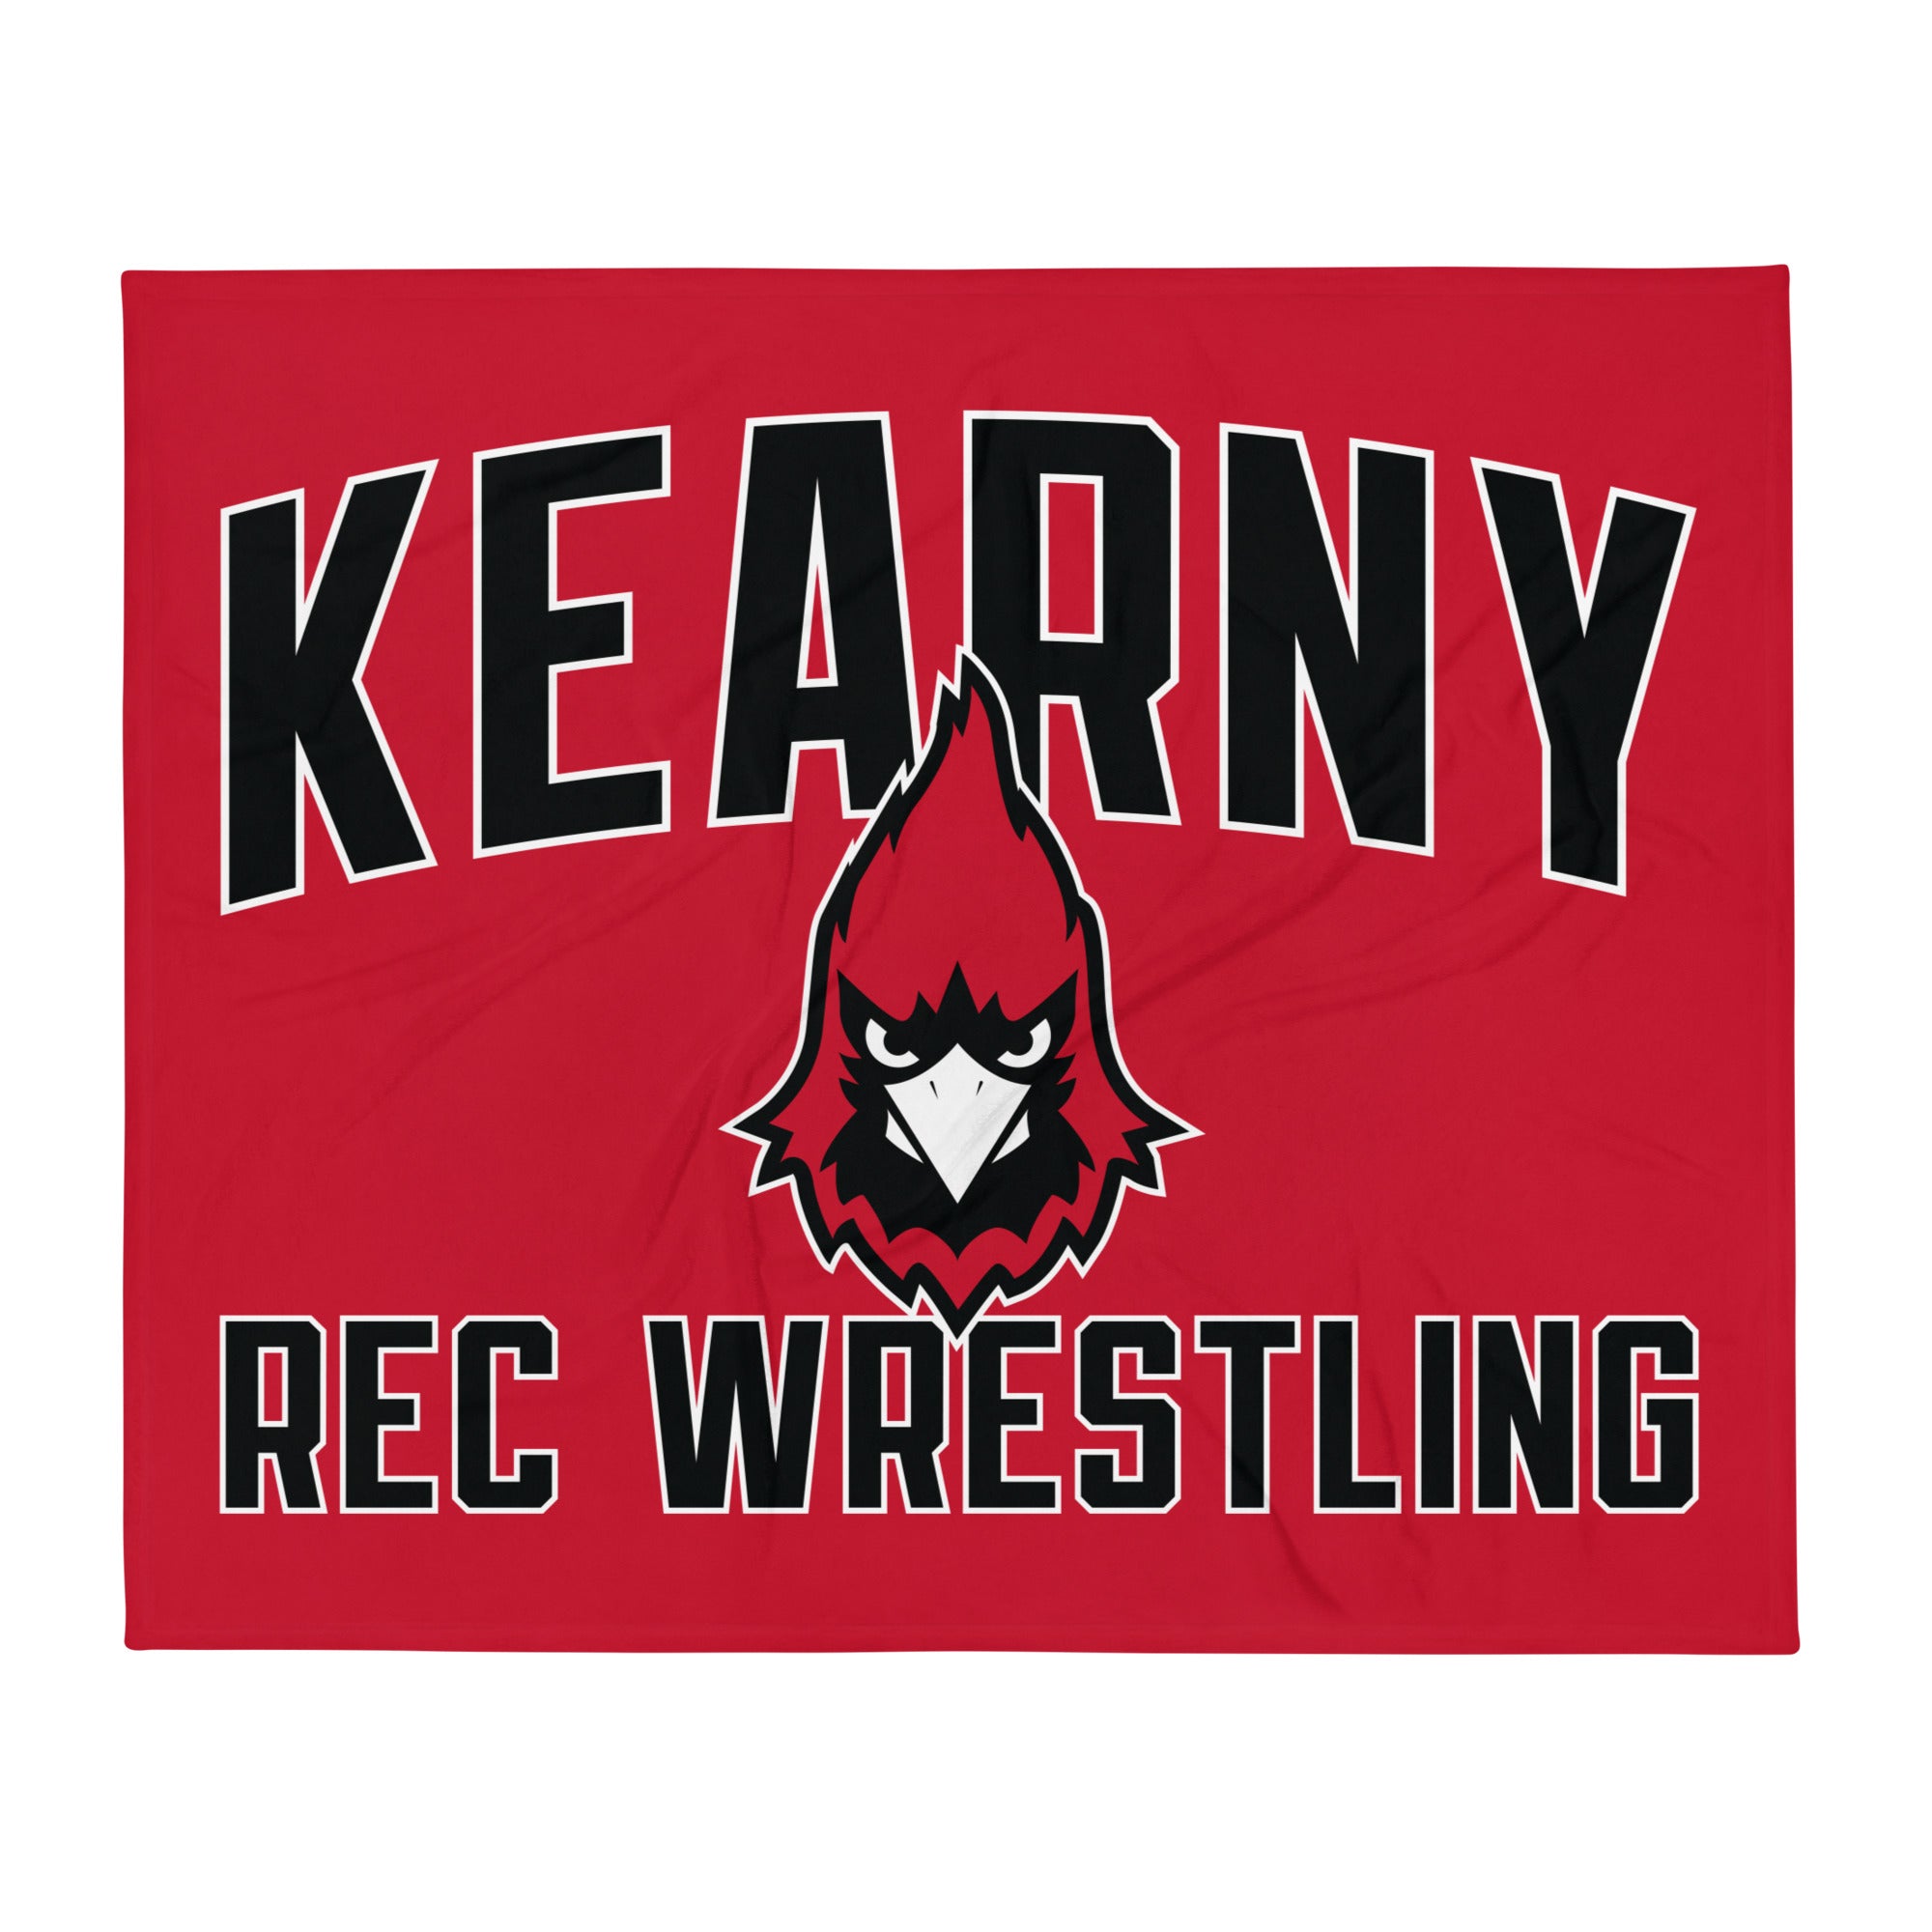 Kearny Rec Wrestling Throw Blanket 50 x 60